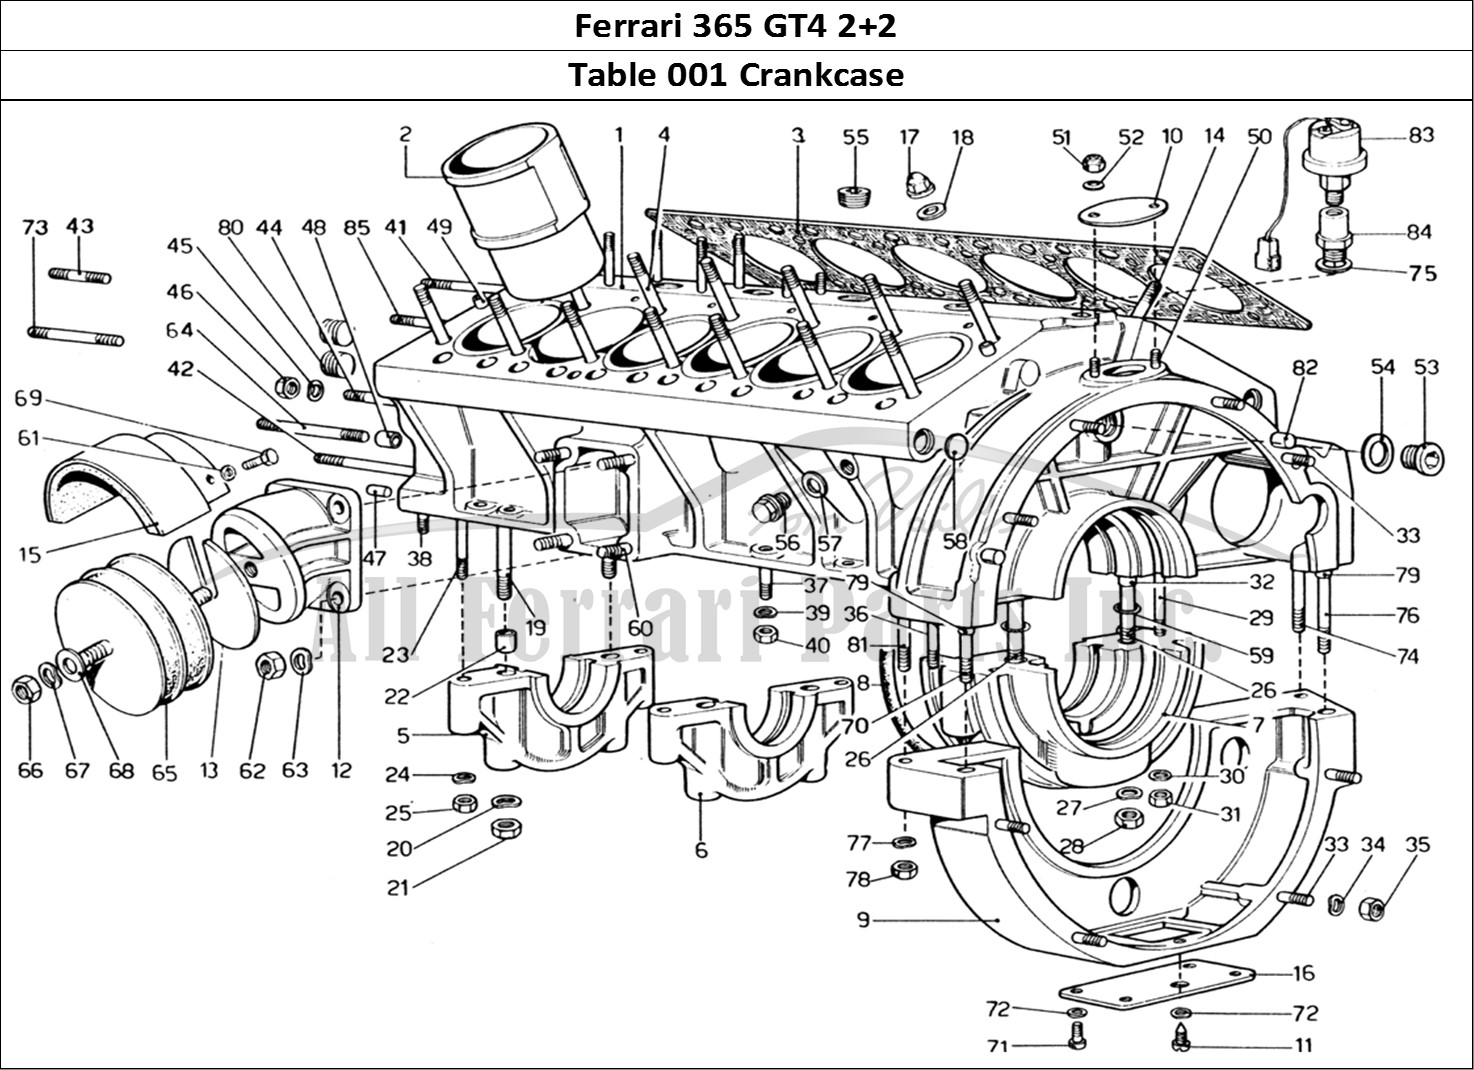 Ferrari Parts Ferrari 365 GT4 2+2 (1973) Page 001 Crankcase